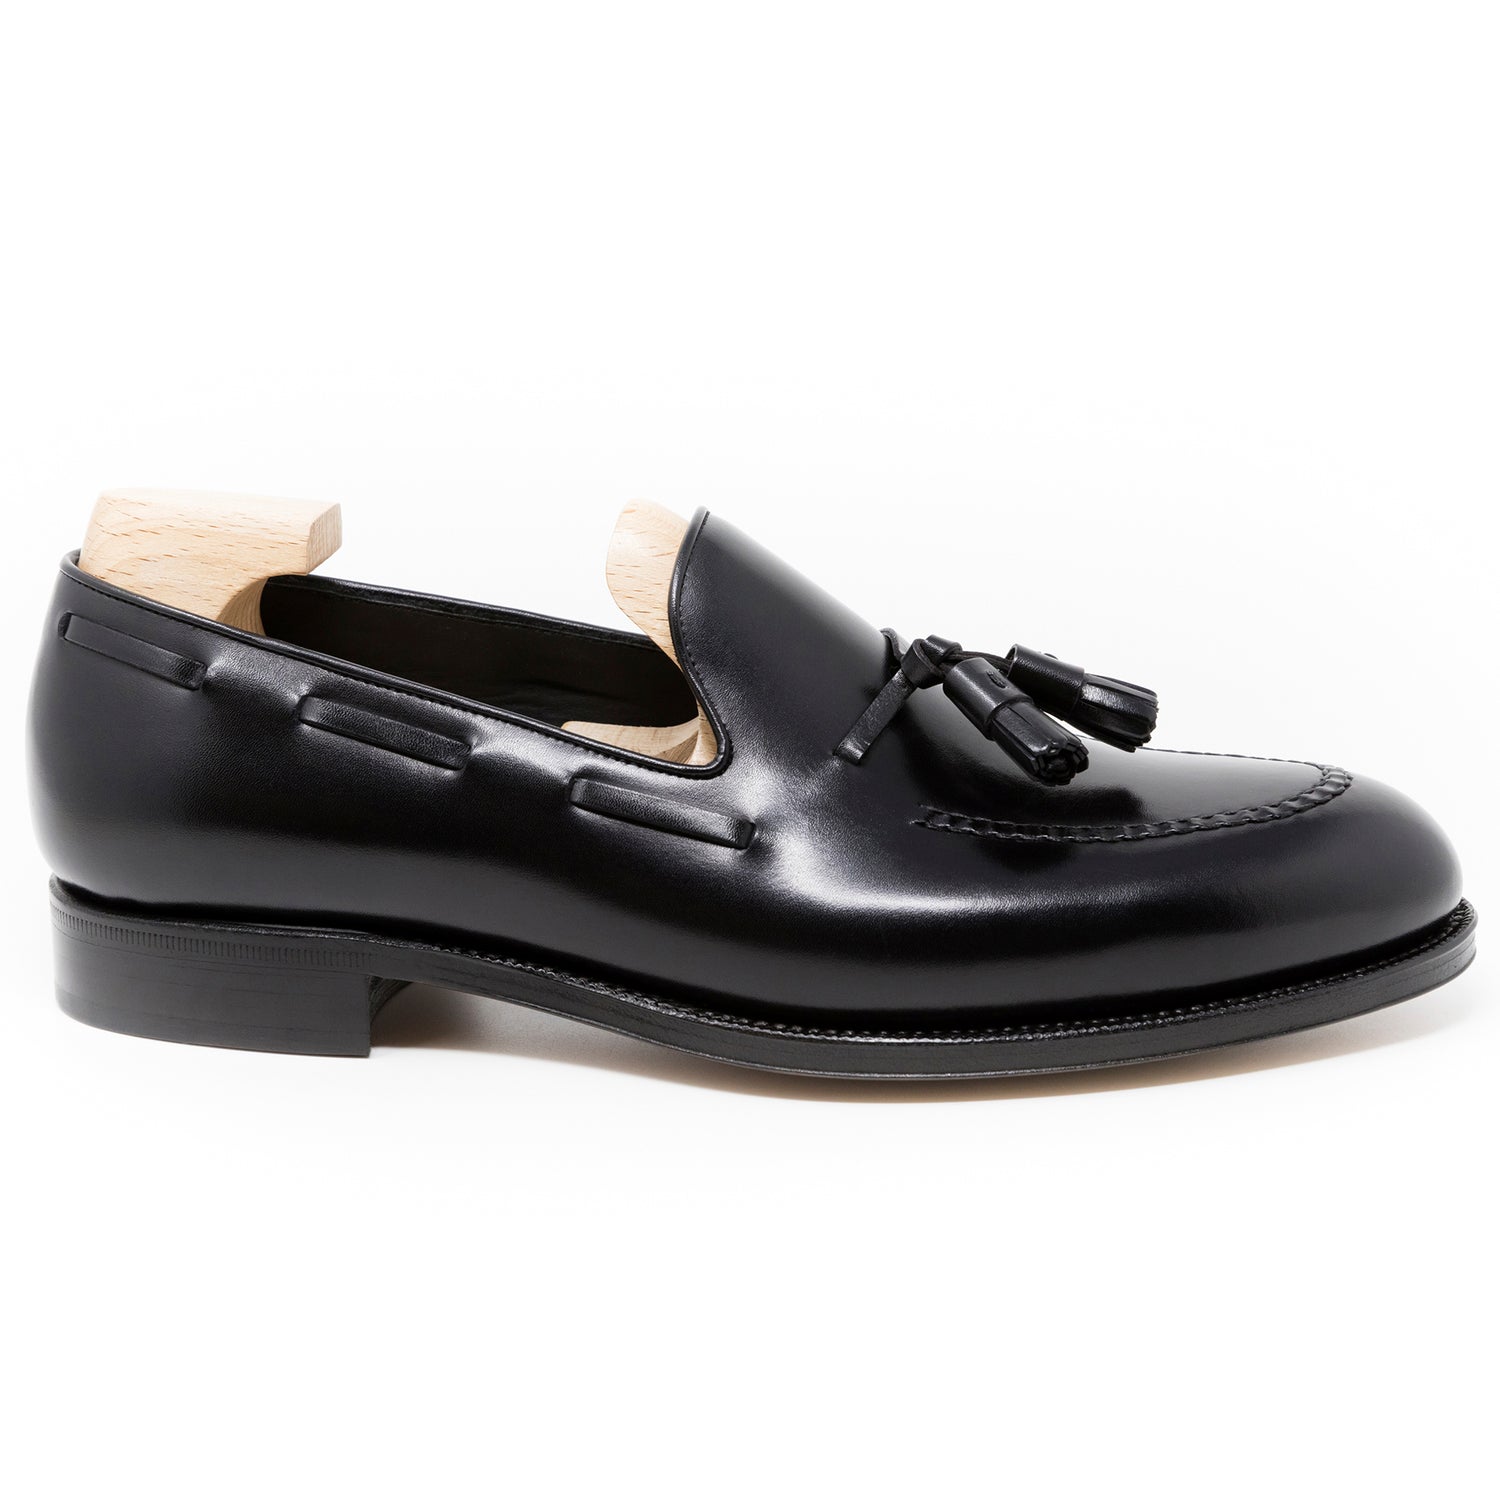 TLB Mallorca leather shoes 656 / JONES / BOXCALF BLACK